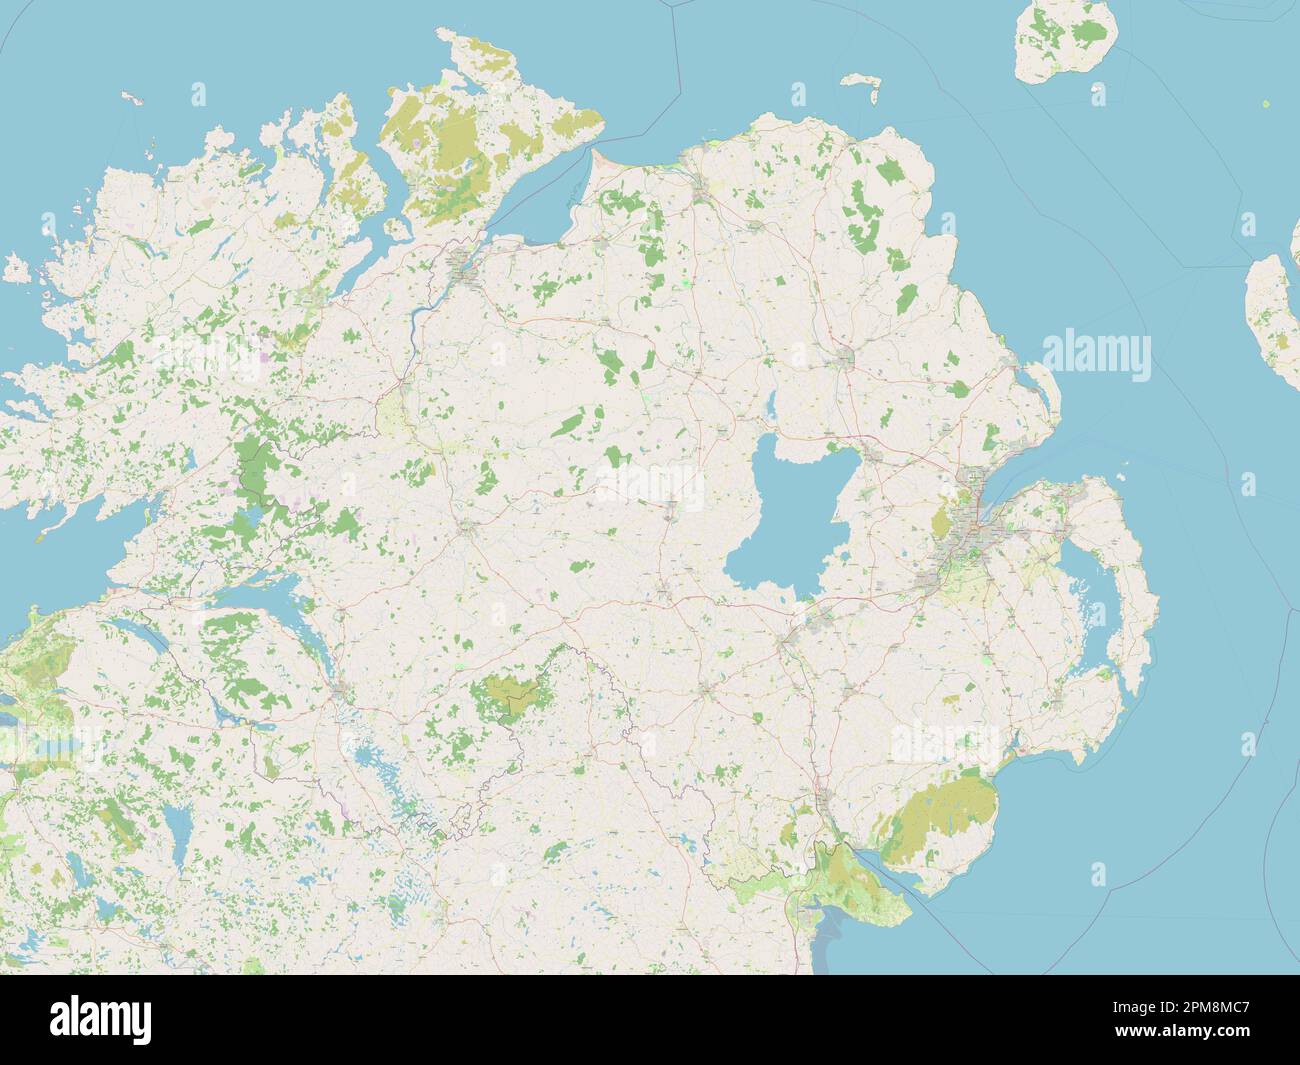 Northern Ireland, region of United Kingdom. Open Street Map Stock Photo